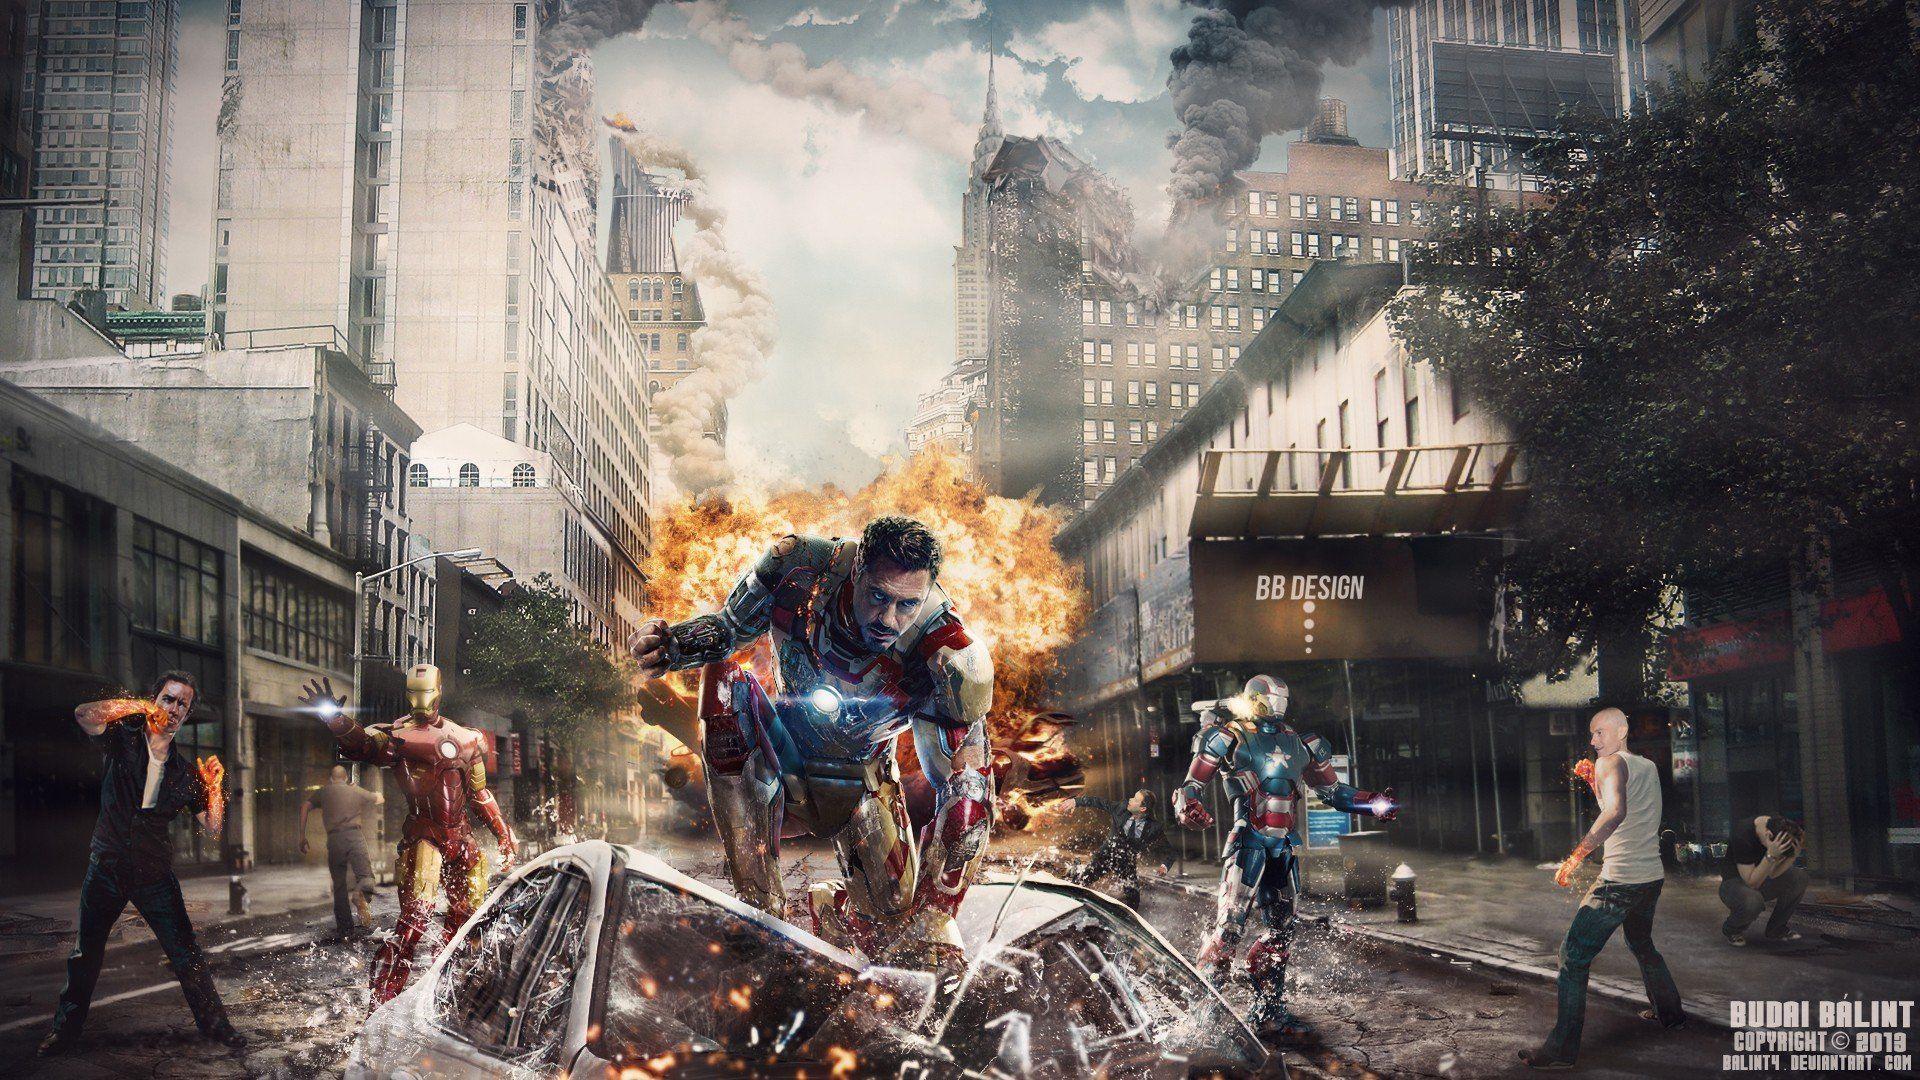 Iron Man cars explosions New York City destroyed Robert Downey Jr